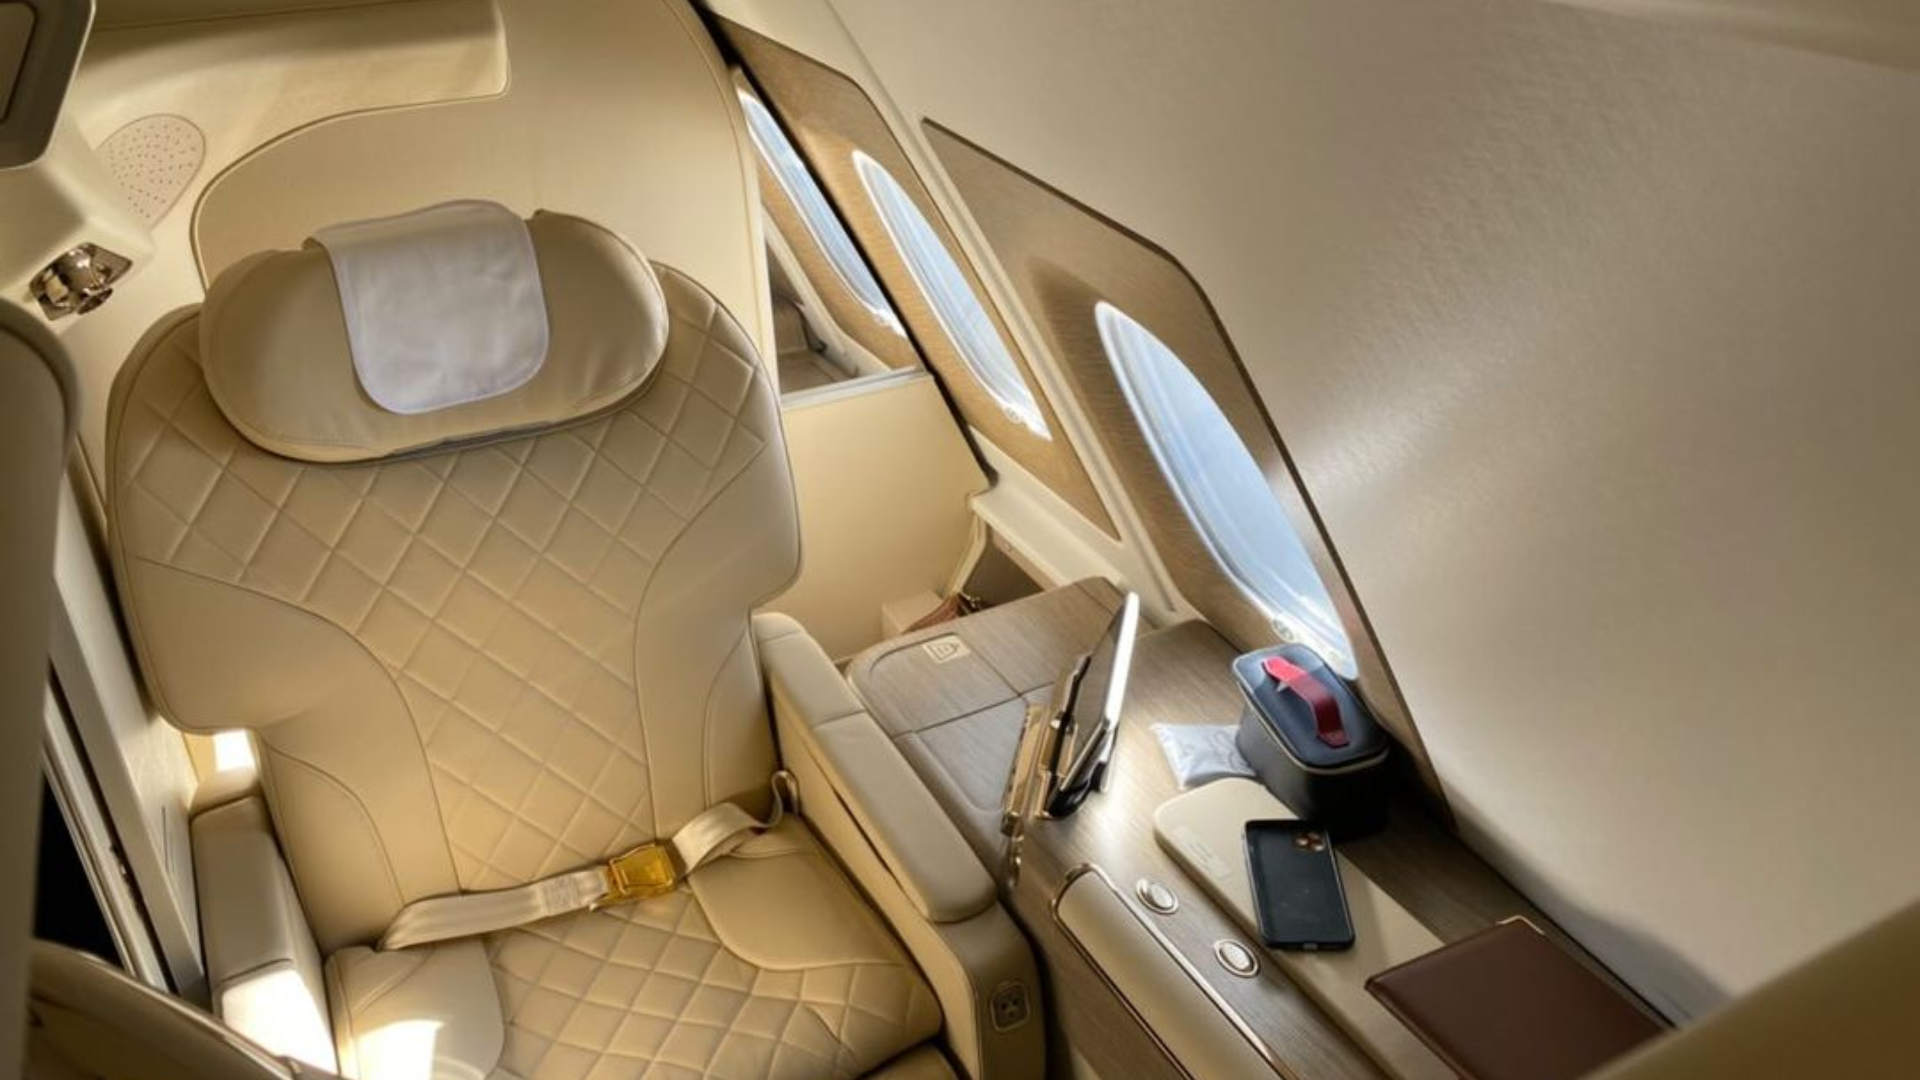 Emirates A380 First class seat retrofit